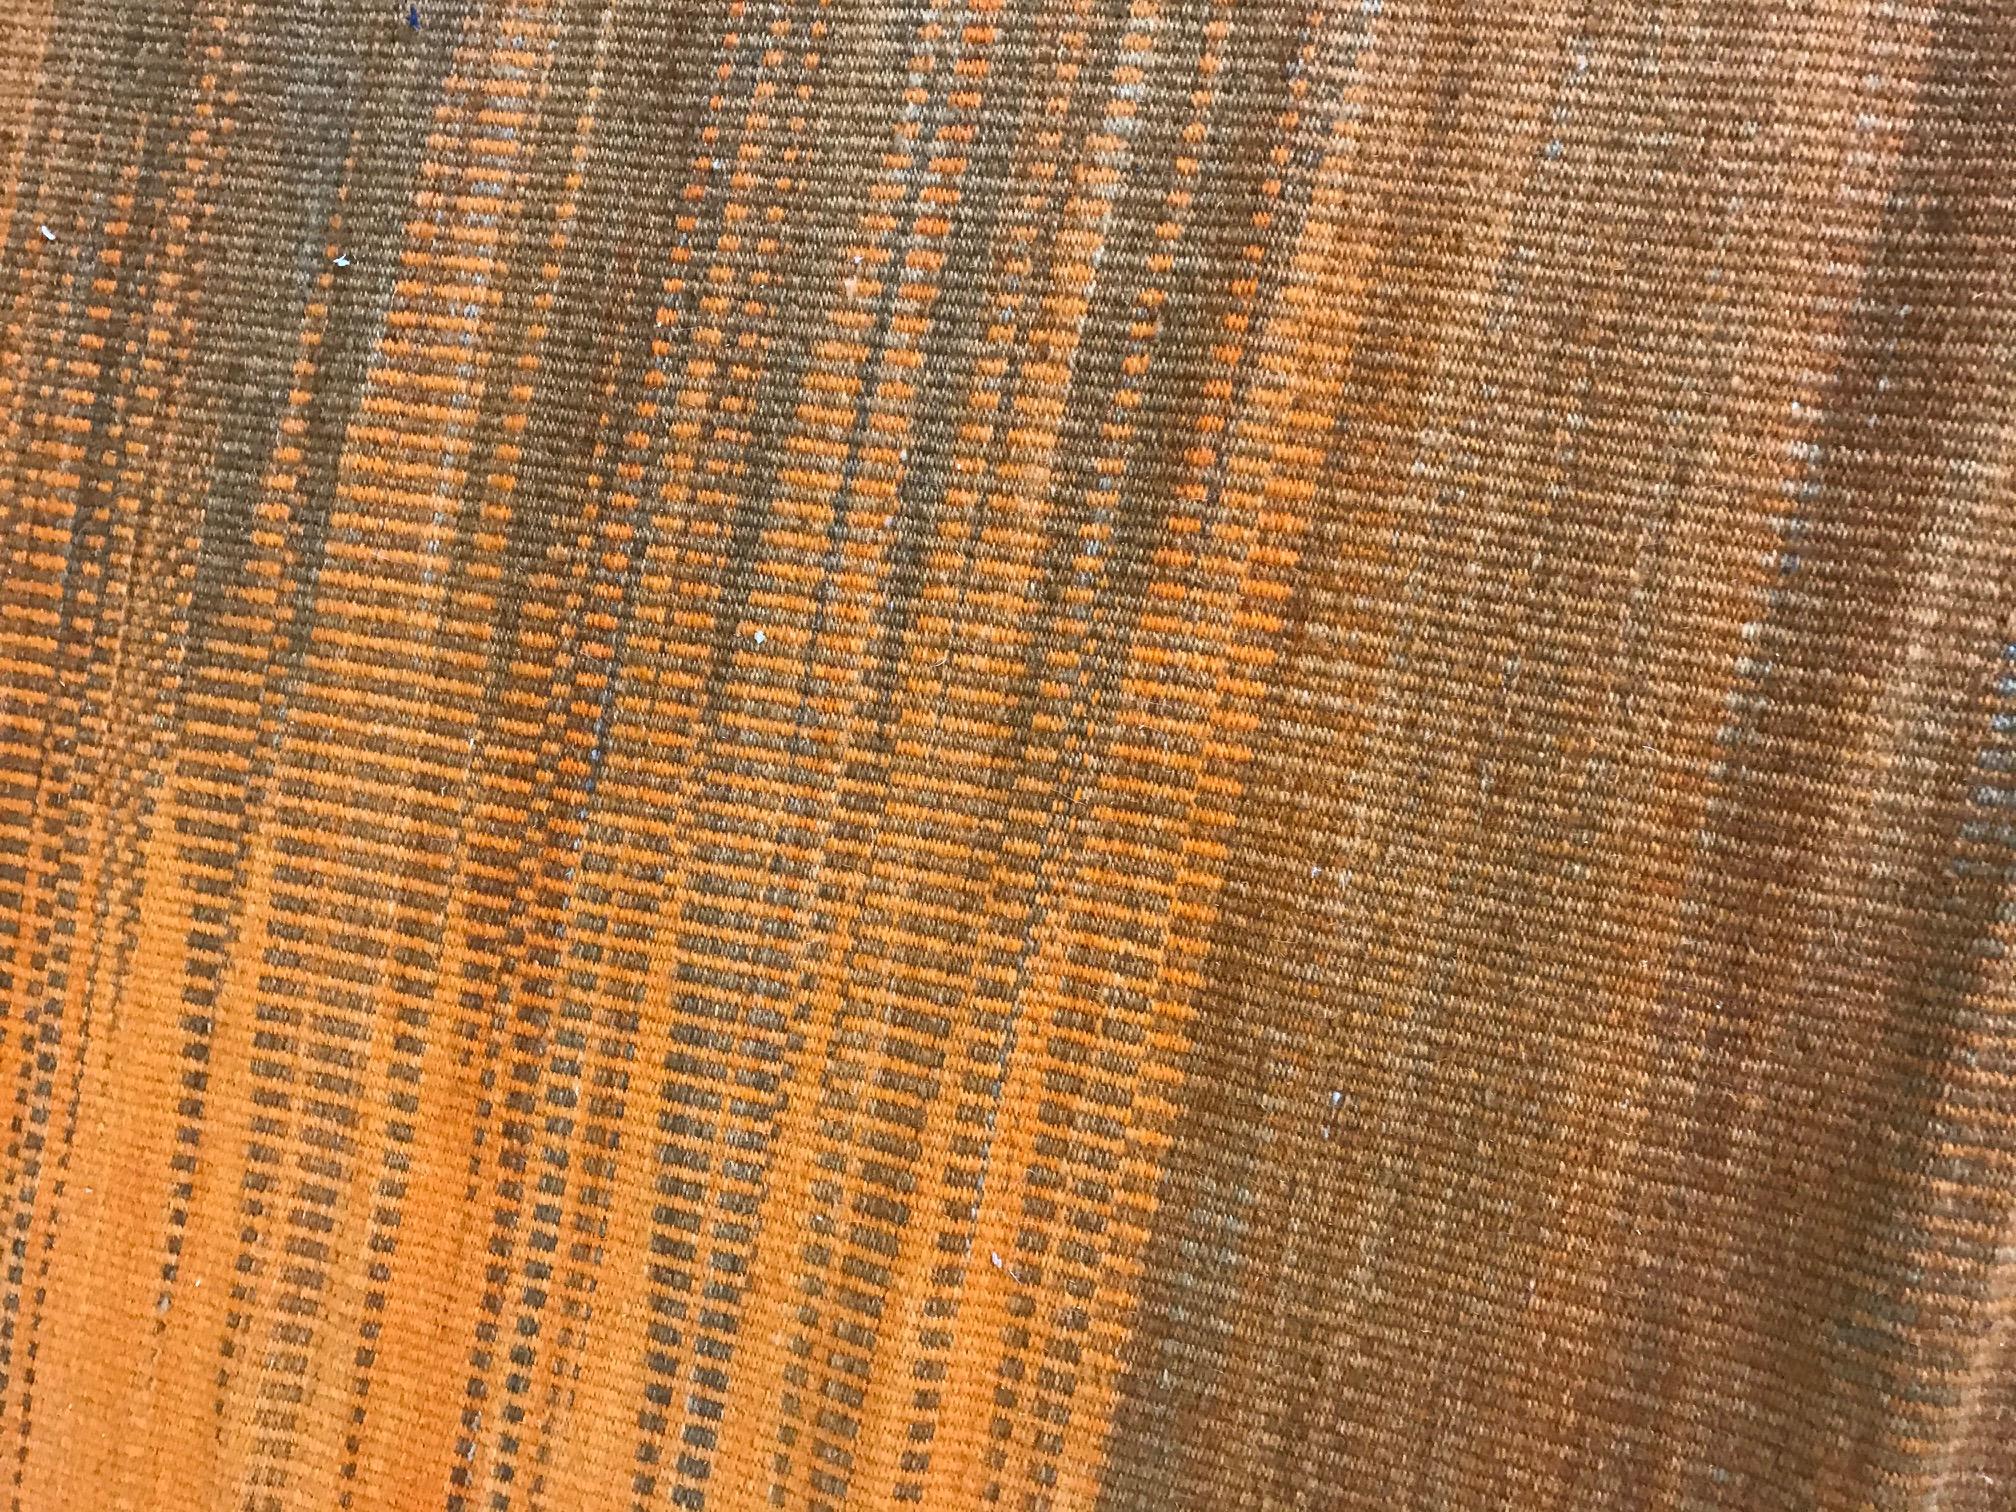 Karatas, Turkish Modern orange and brown kilim rug by Doris Leslie Blau.
Size: 6'0